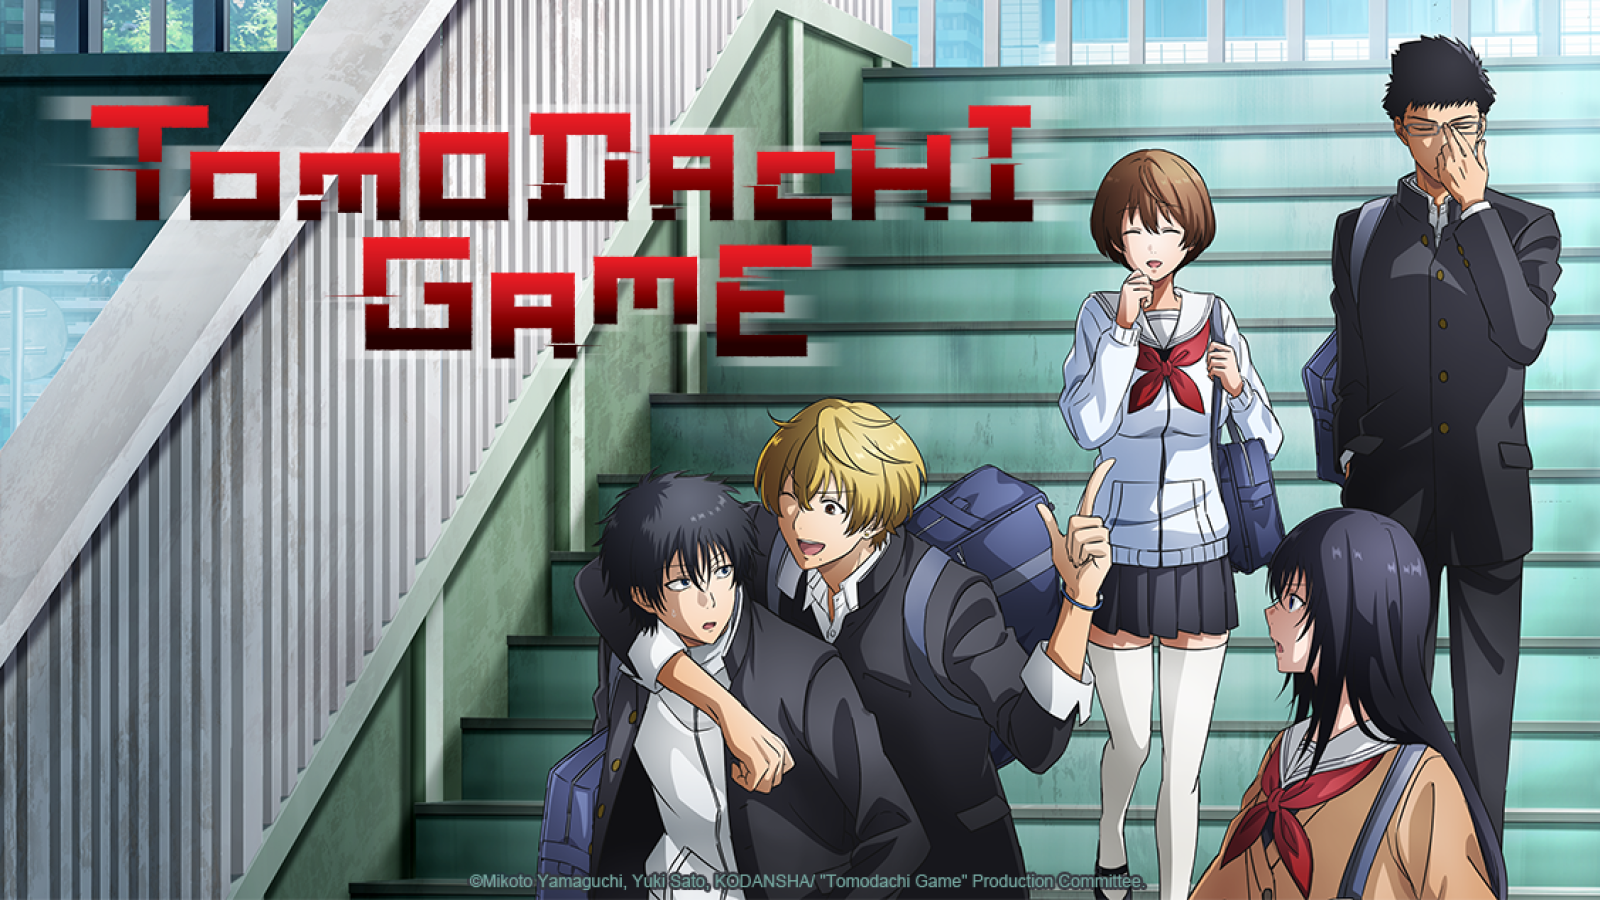 Tomodachi Game' Episode 12 Live Stream Details: Weak Win Game [Spoilers]